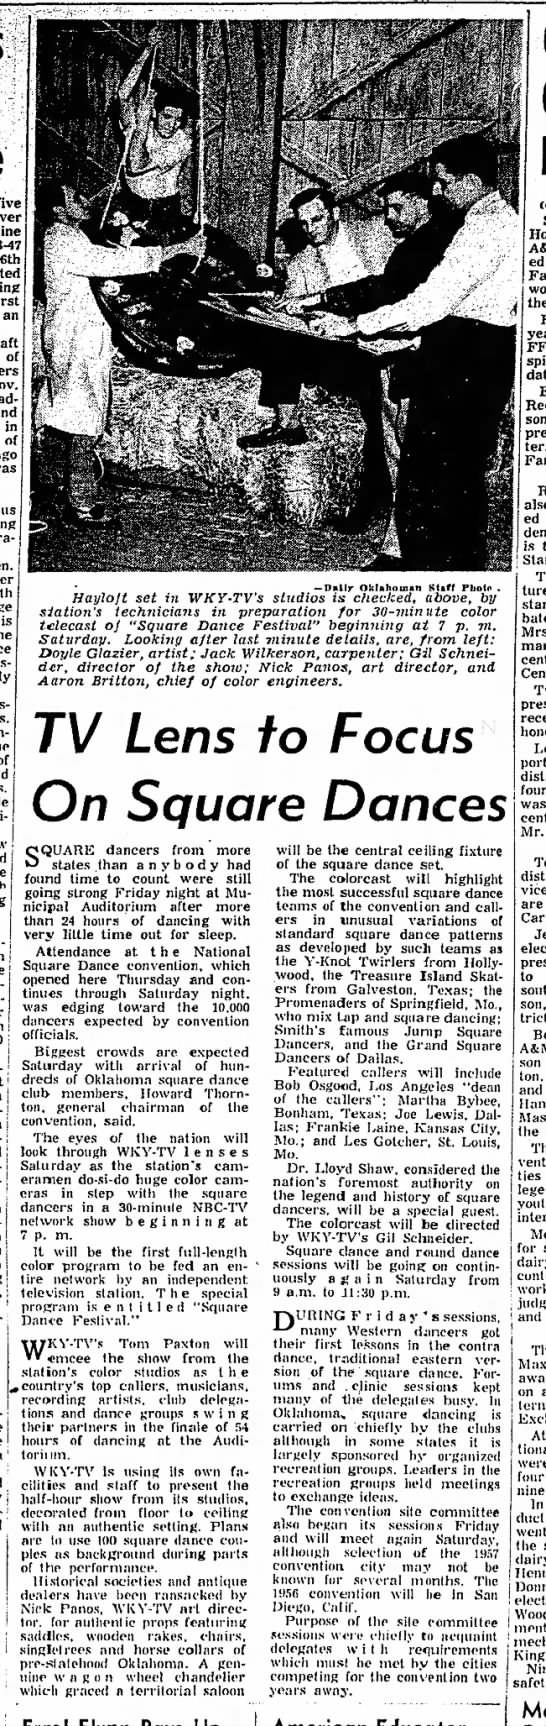 TV Lens to Focus On Square Dances - 